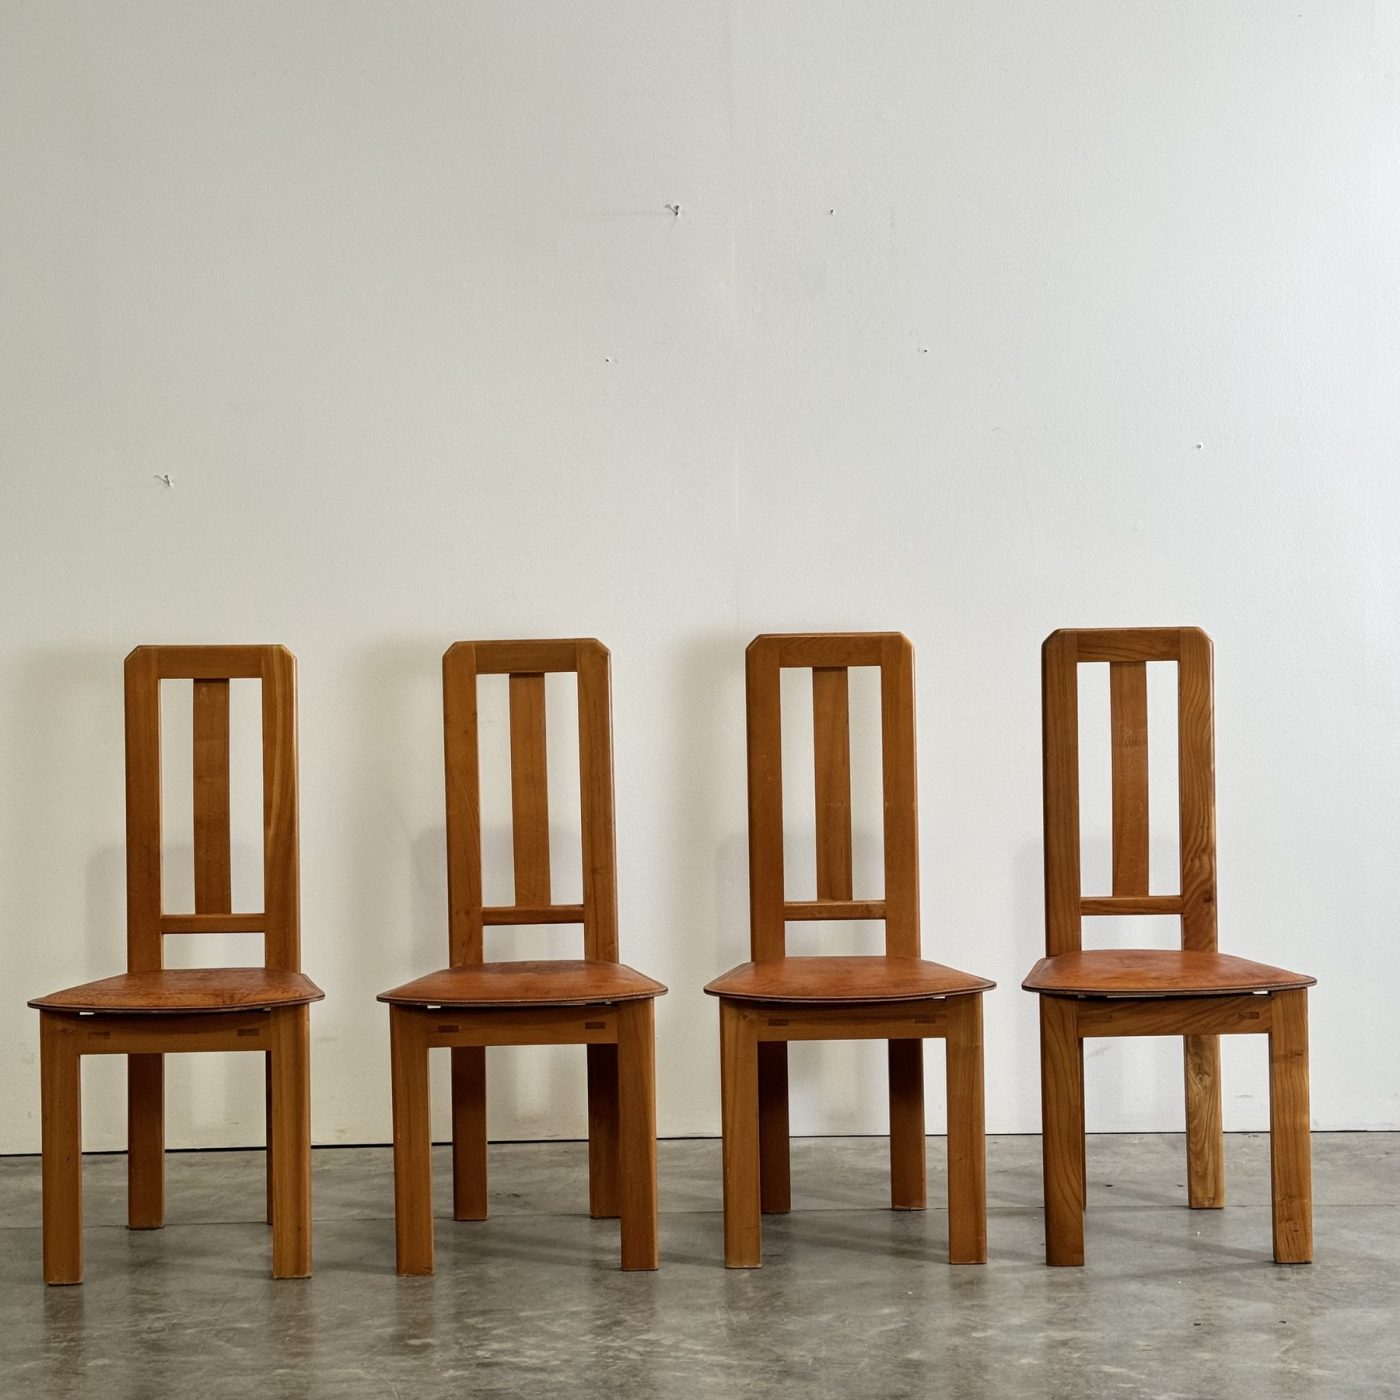 objet-vagabond-elm-chairs0005